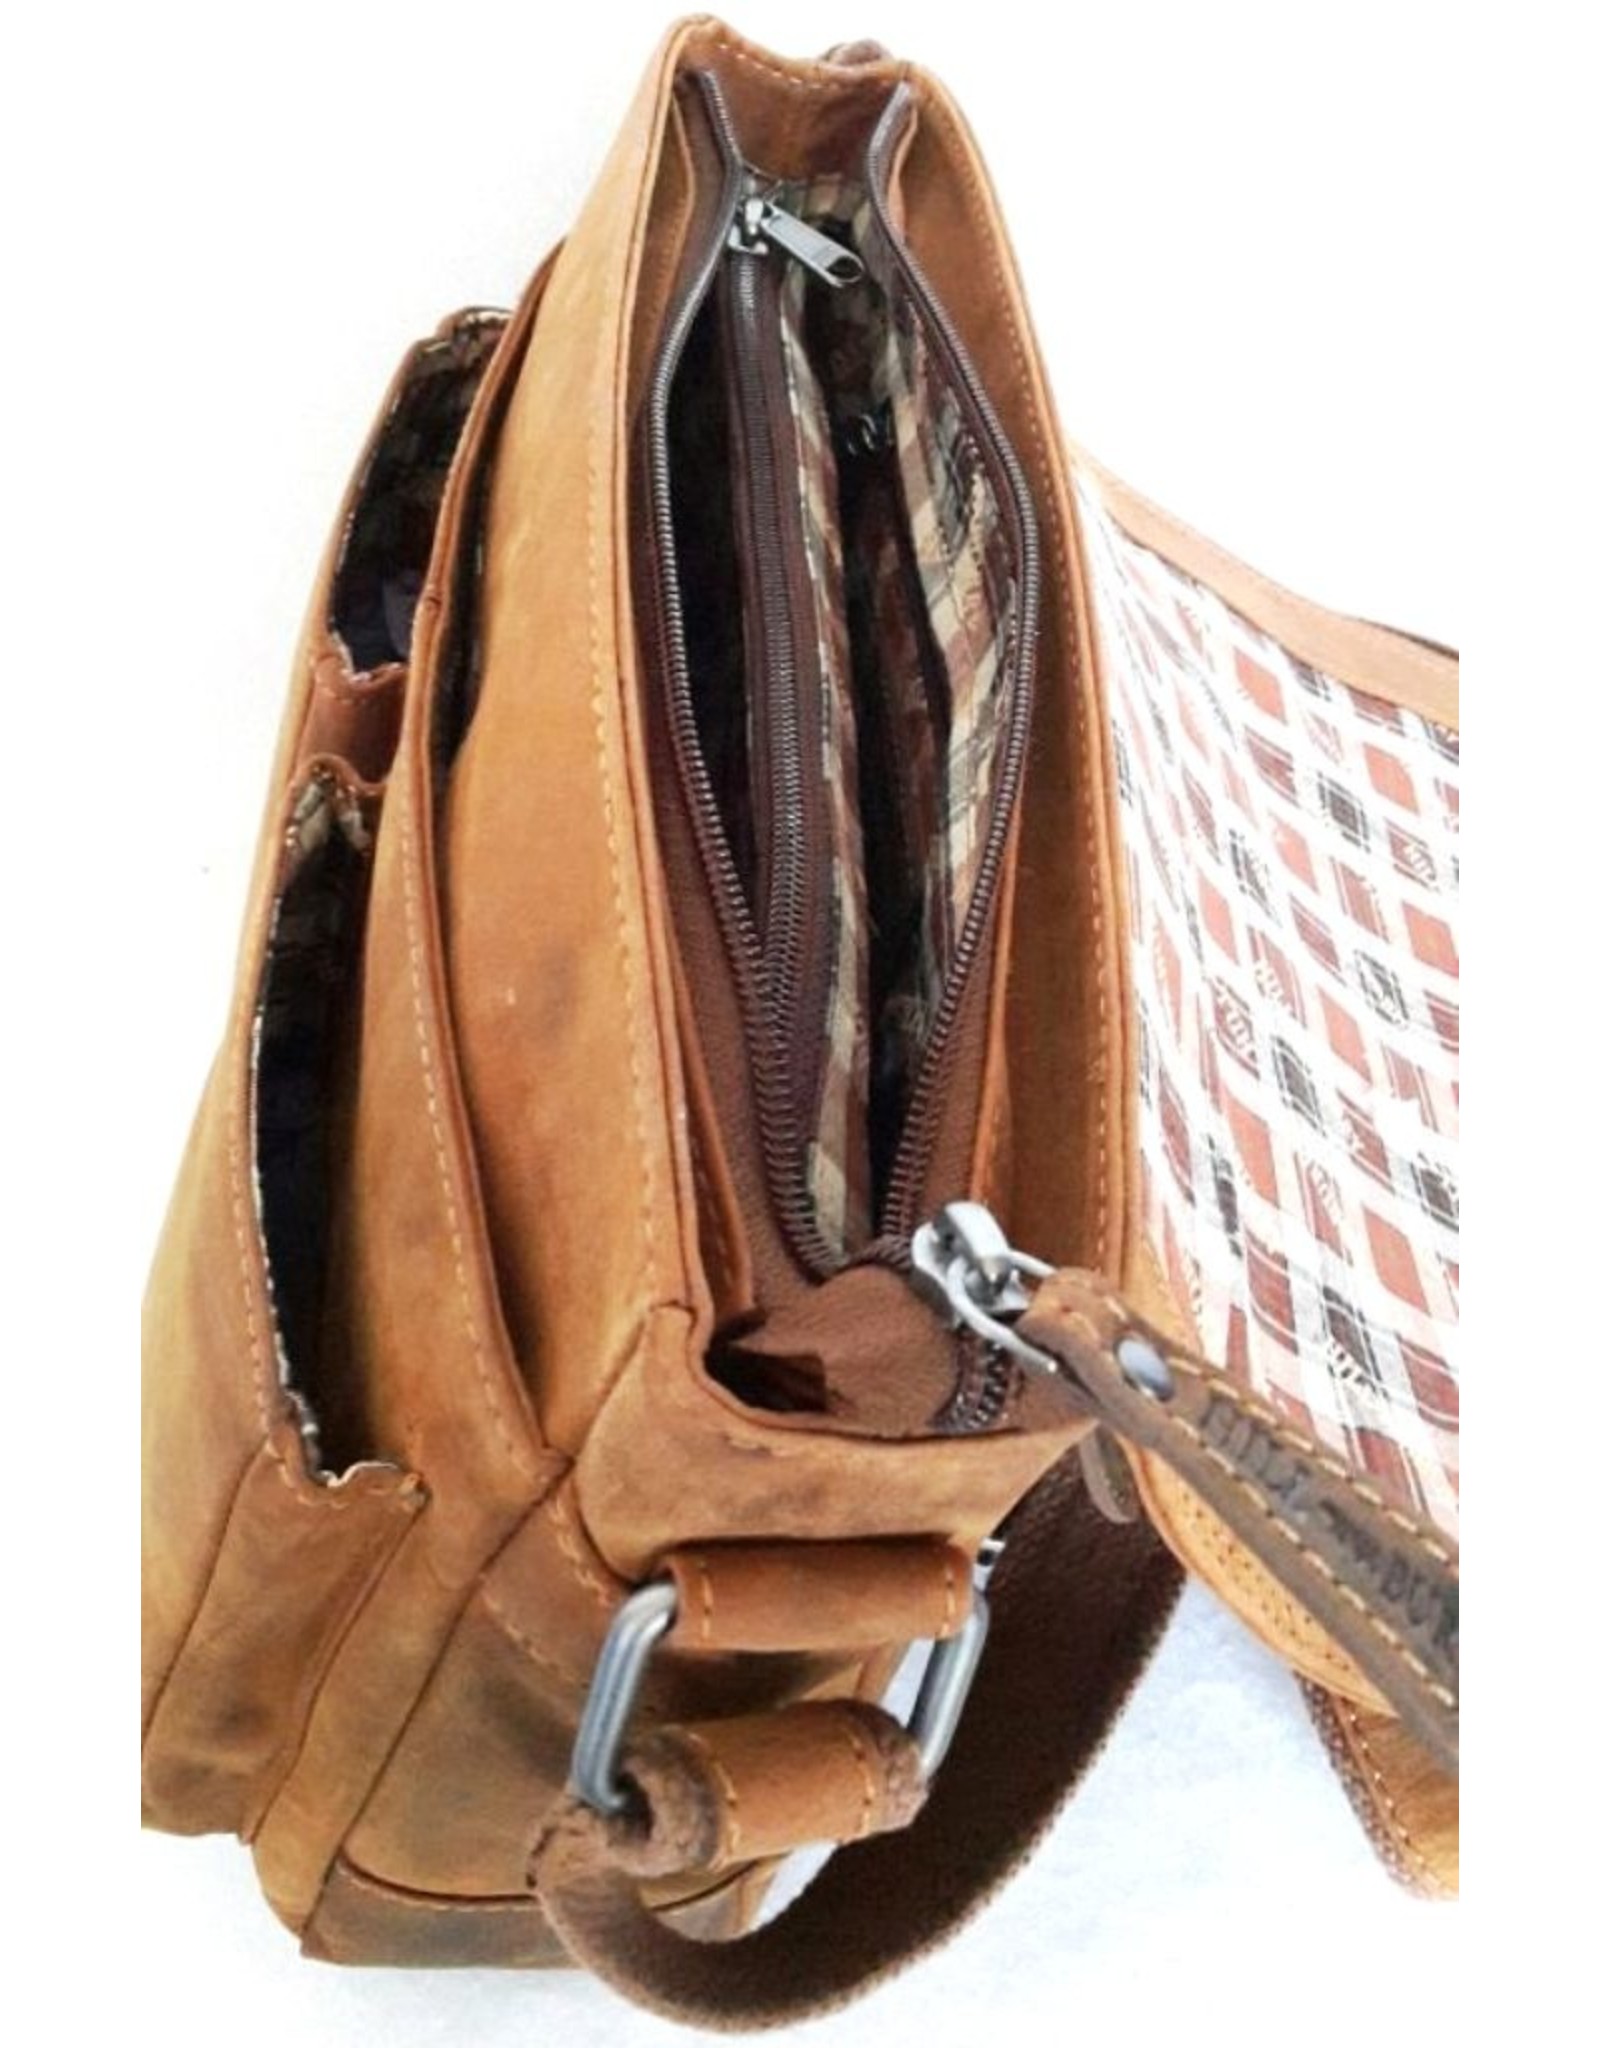 HillBurry Leather Shoulder bags  Leather crossbody bags - Hillburry leather shoulder bag vintage look (medium)